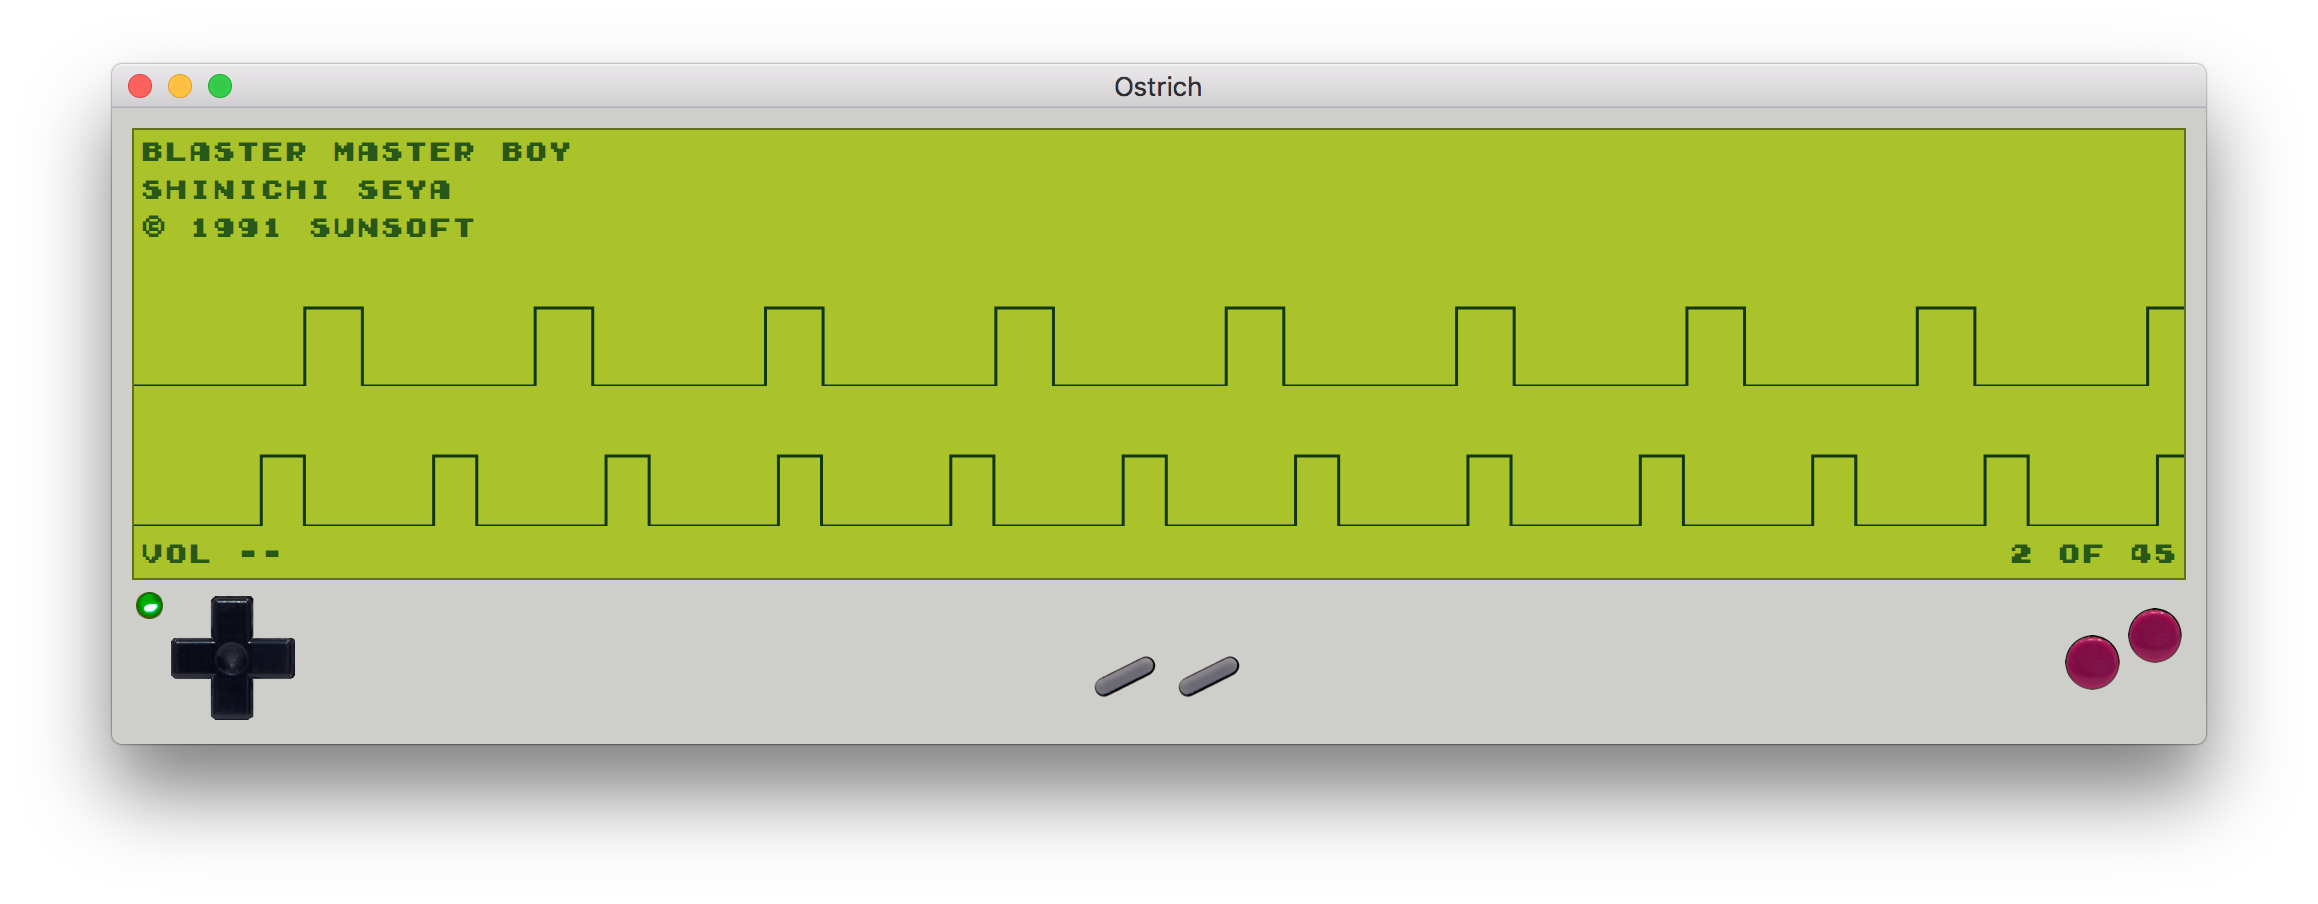 Ostrich: A Game Boy Sound System Player